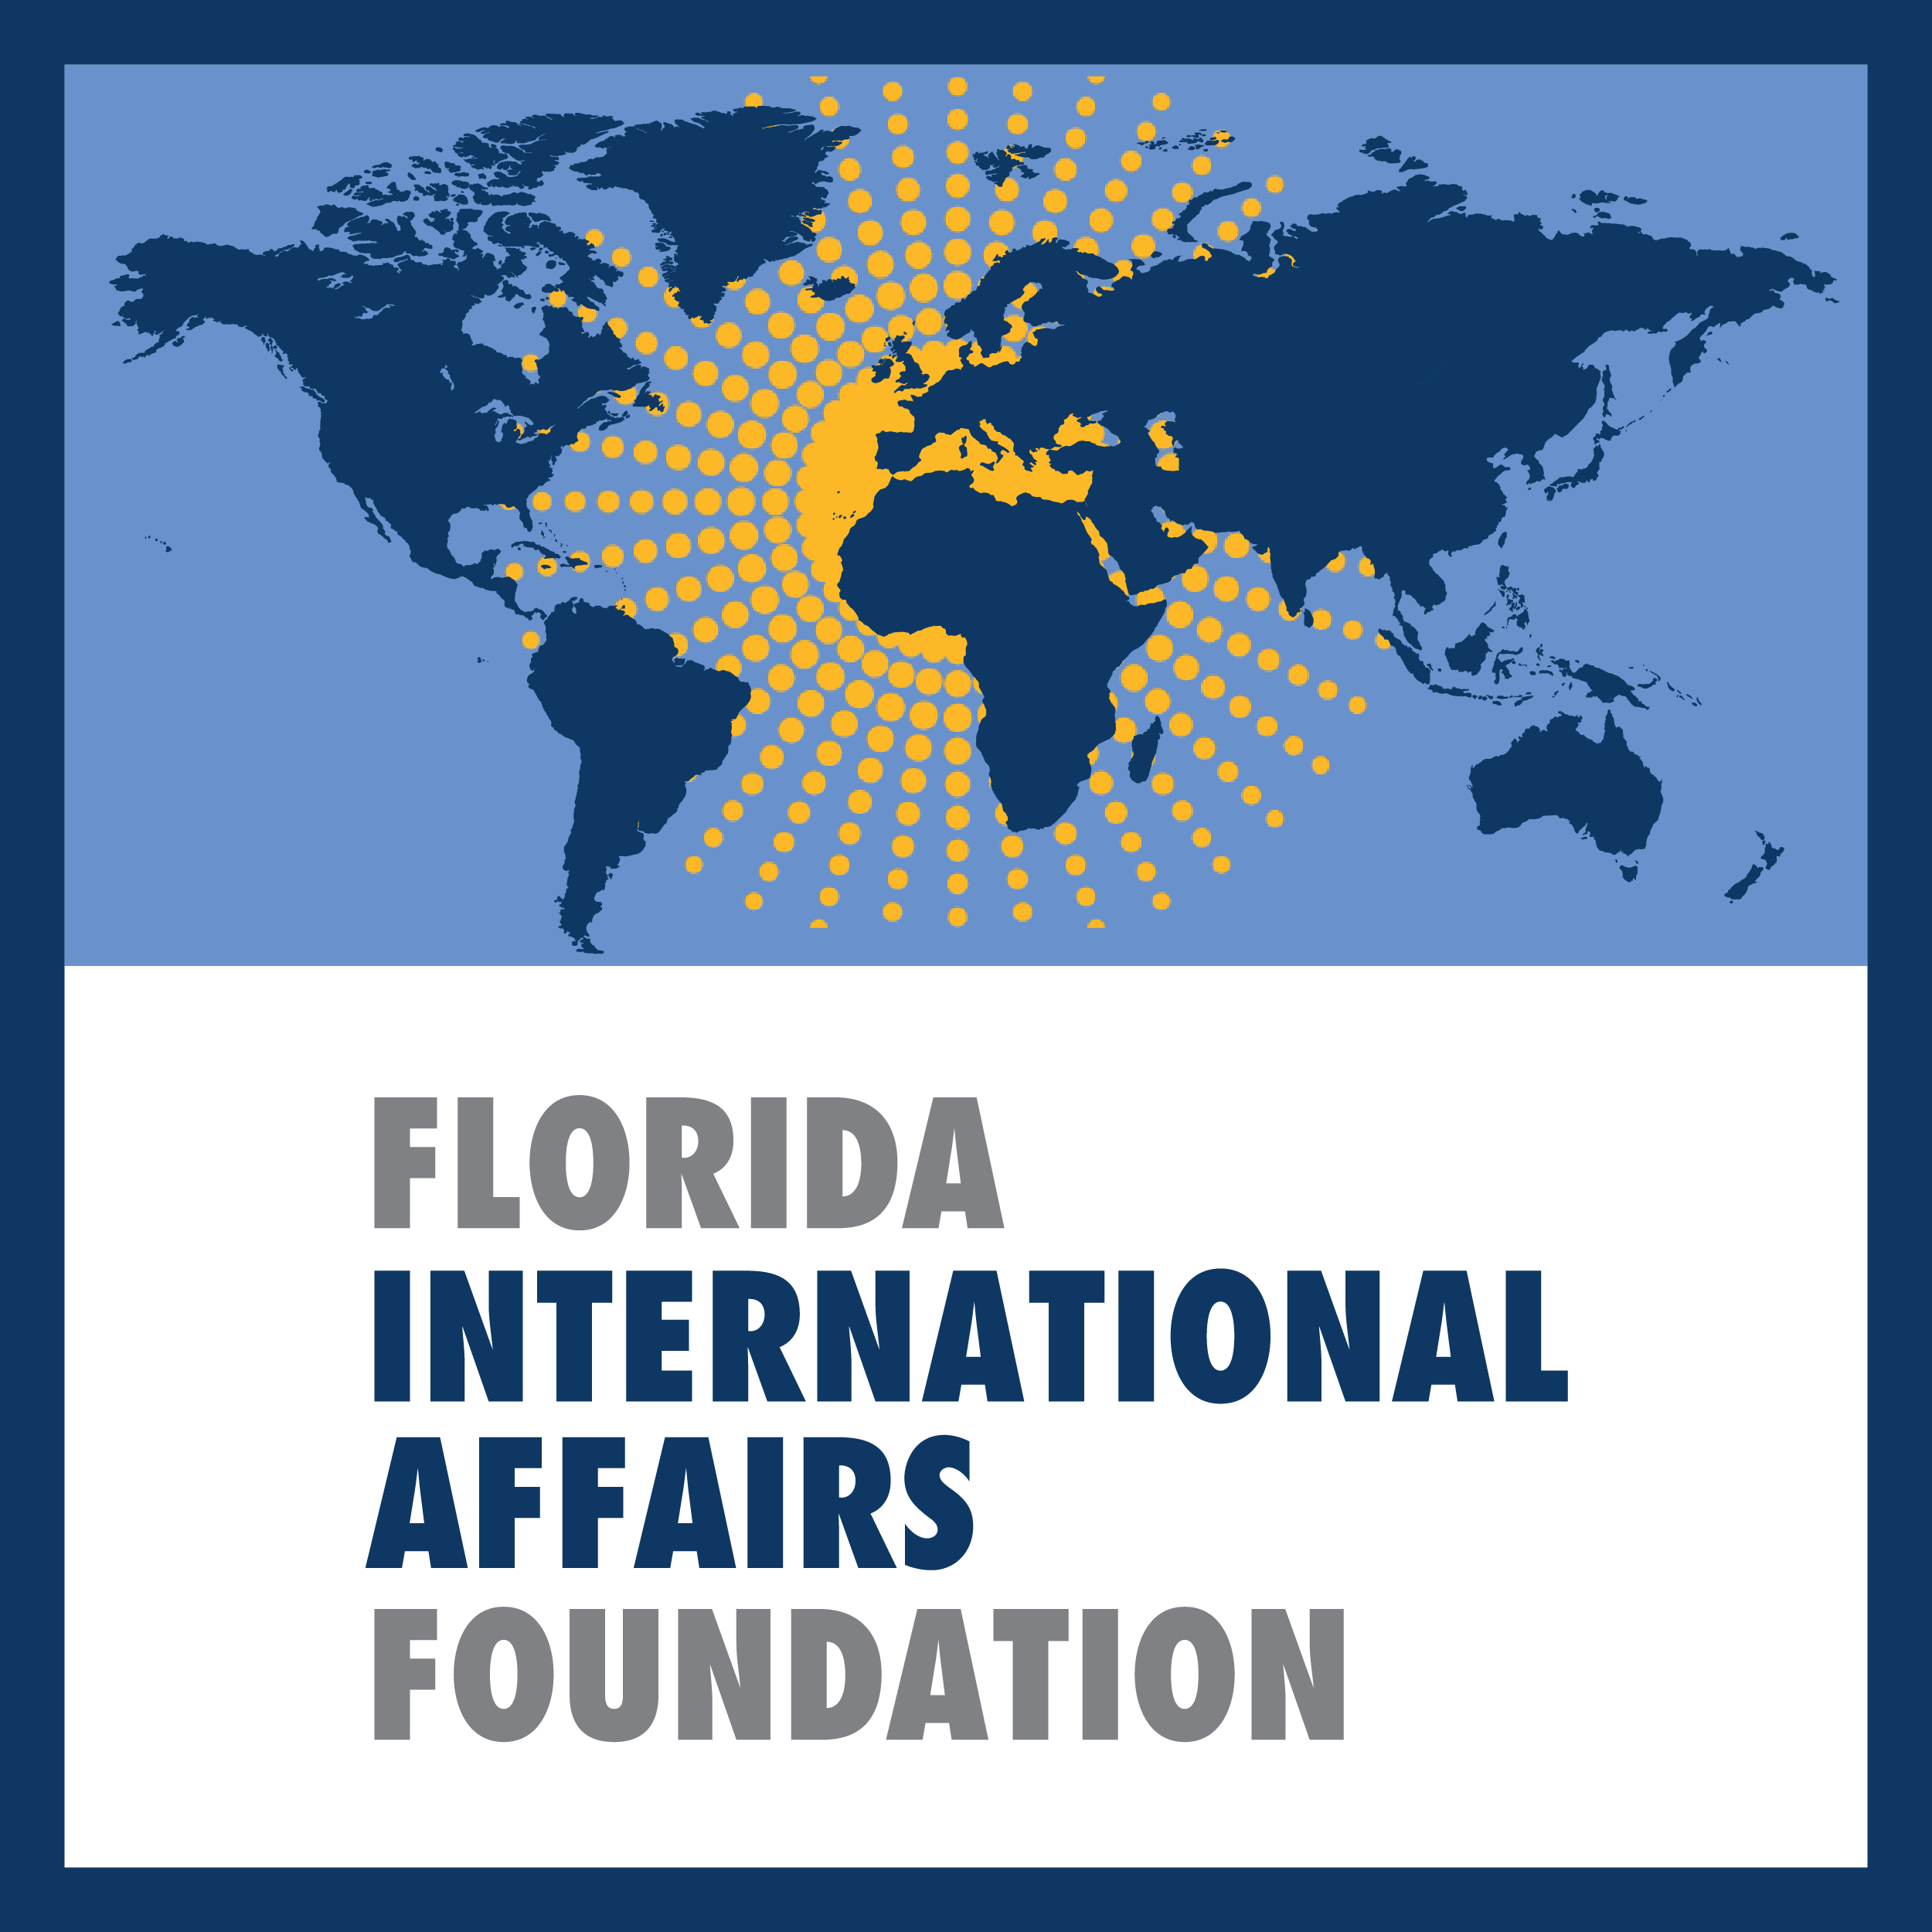 Florida International Affairs Foundation